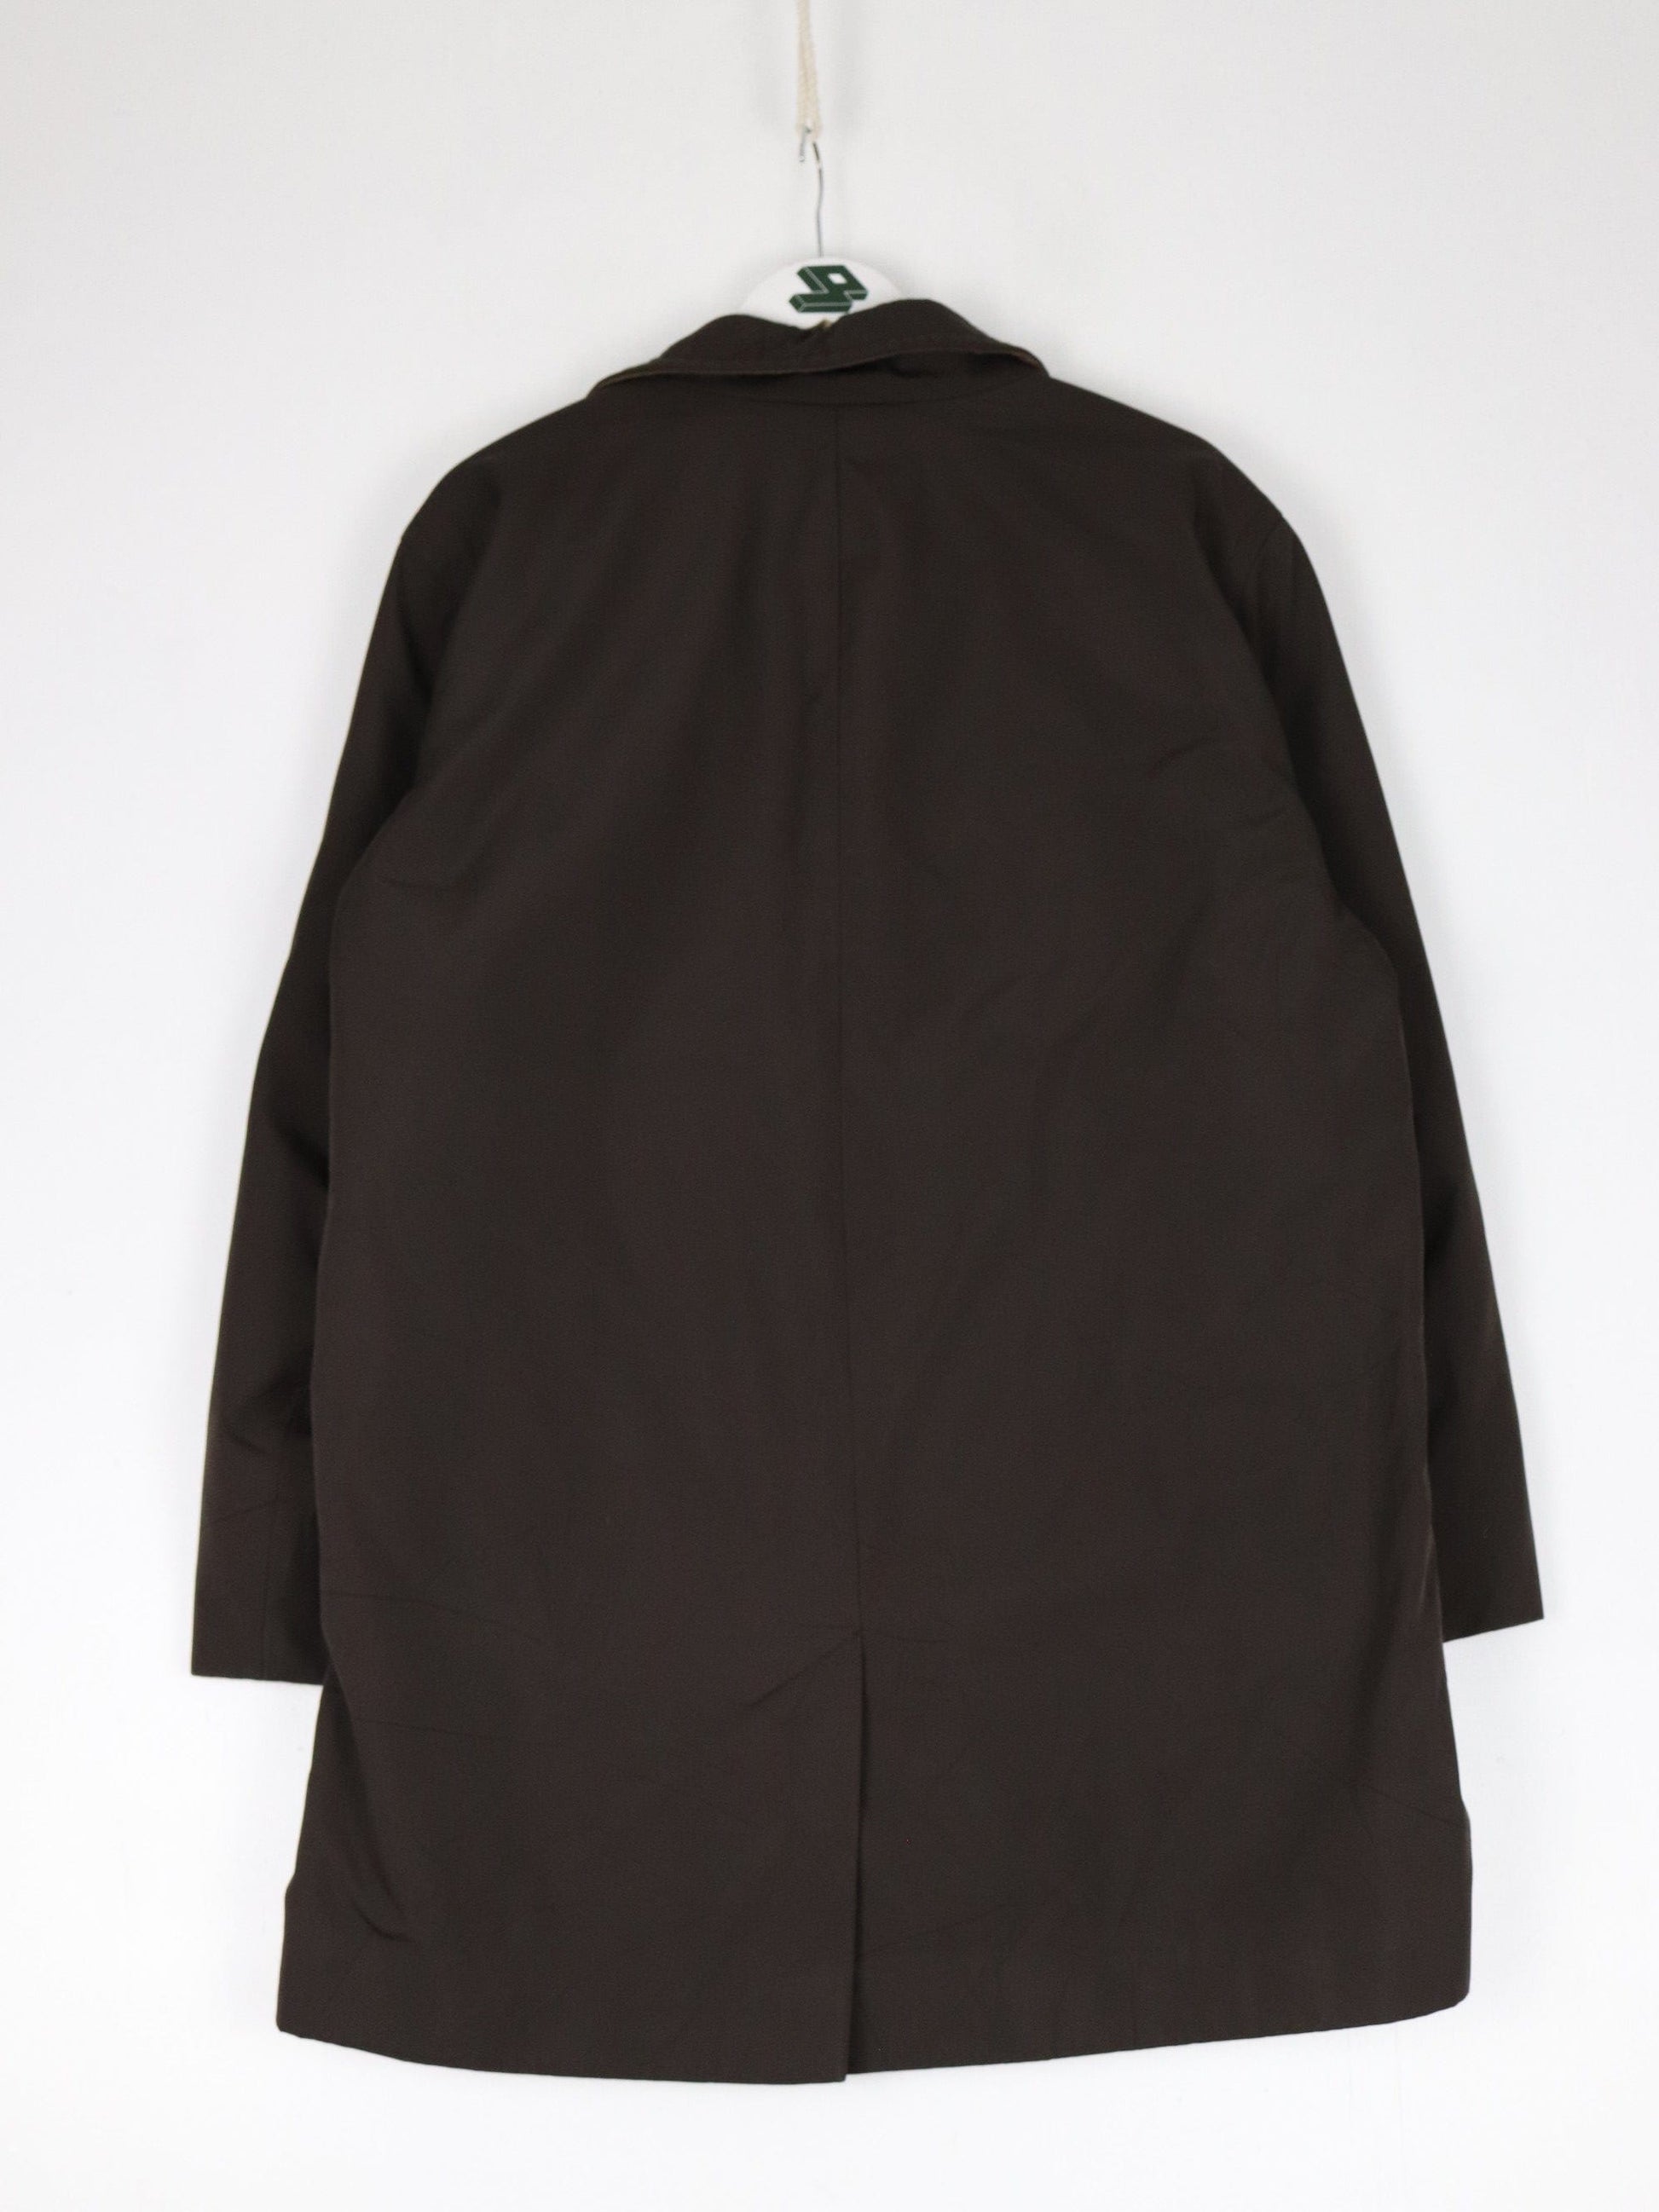 Boss Jackets & Coats Hugo Boss Jacket Mens Large Brown Corio Coat